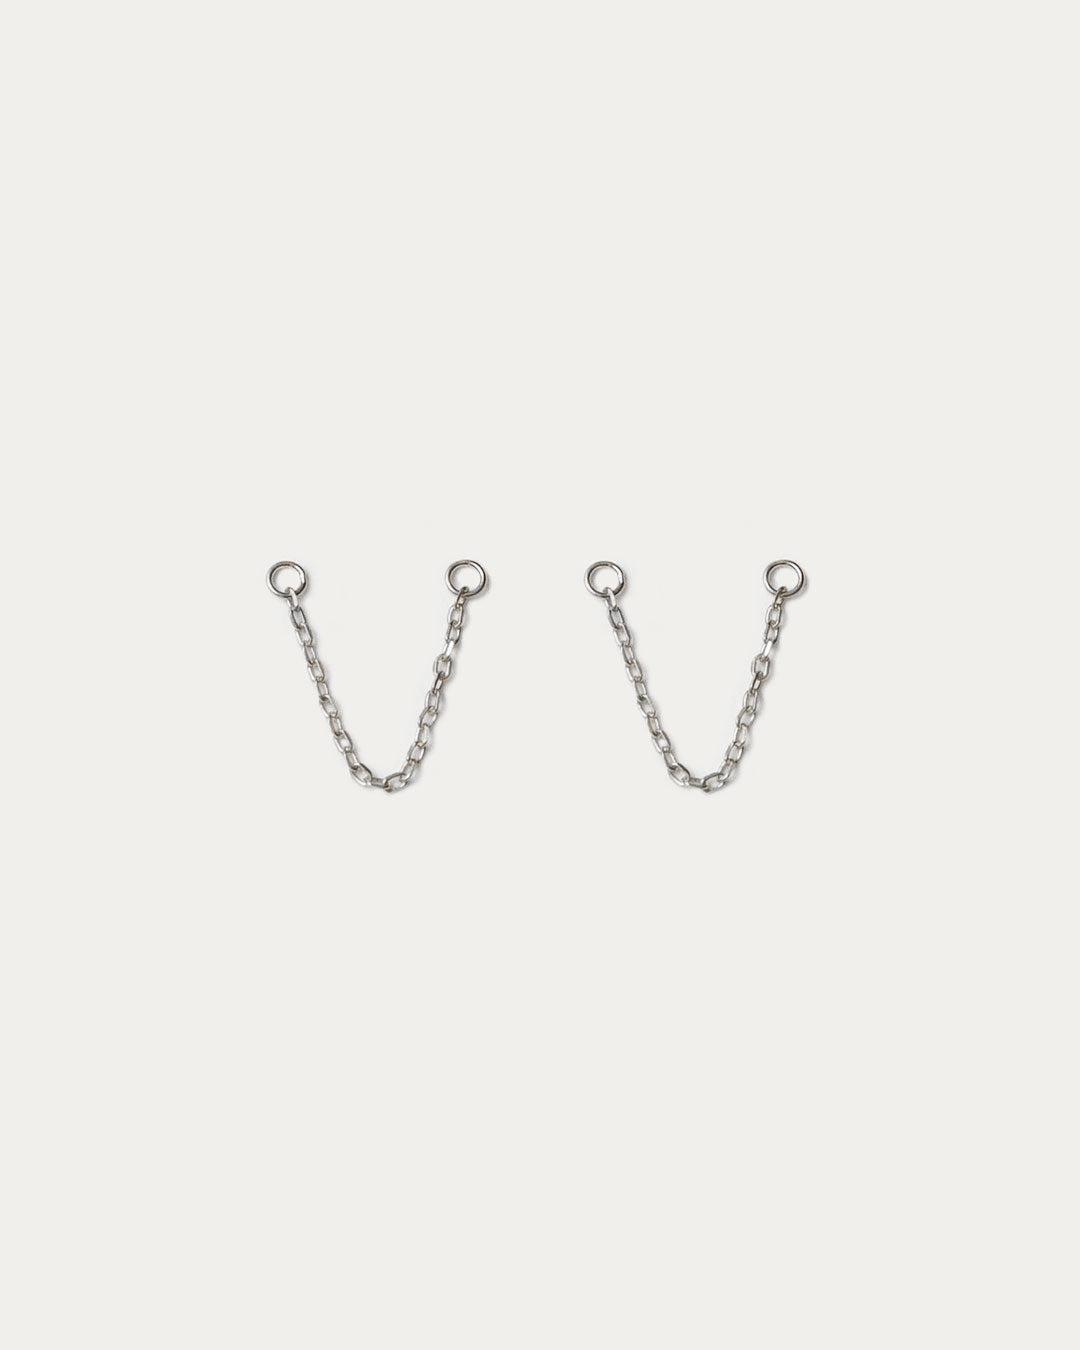 Chain Ear Jackets (Small) - Silver